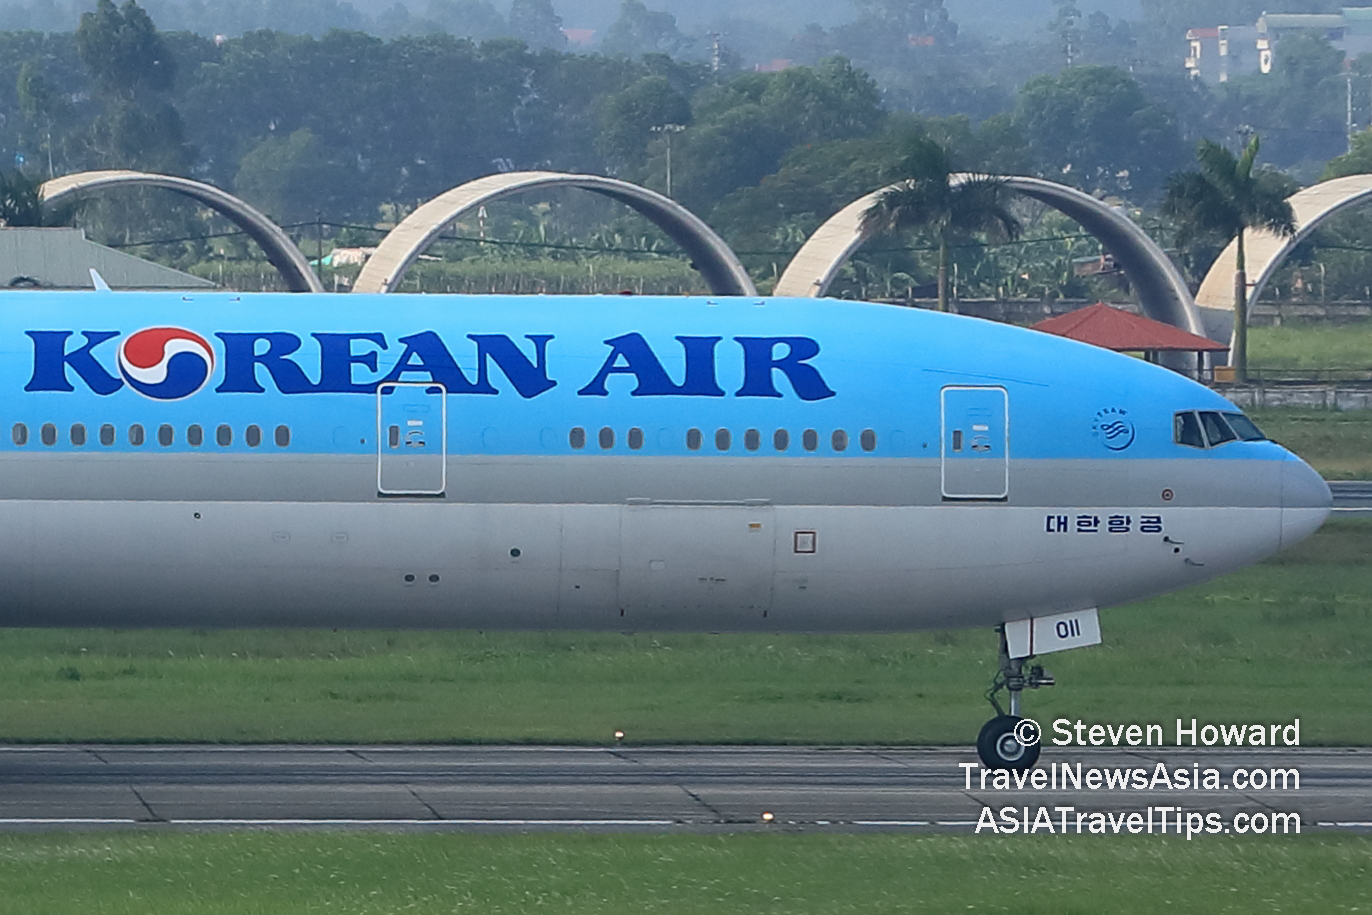 Korean Air Boeing 777-300ER reg: HK80II. Picture by Steven Howard of TravelNewsAsia.com Click to enlarge.